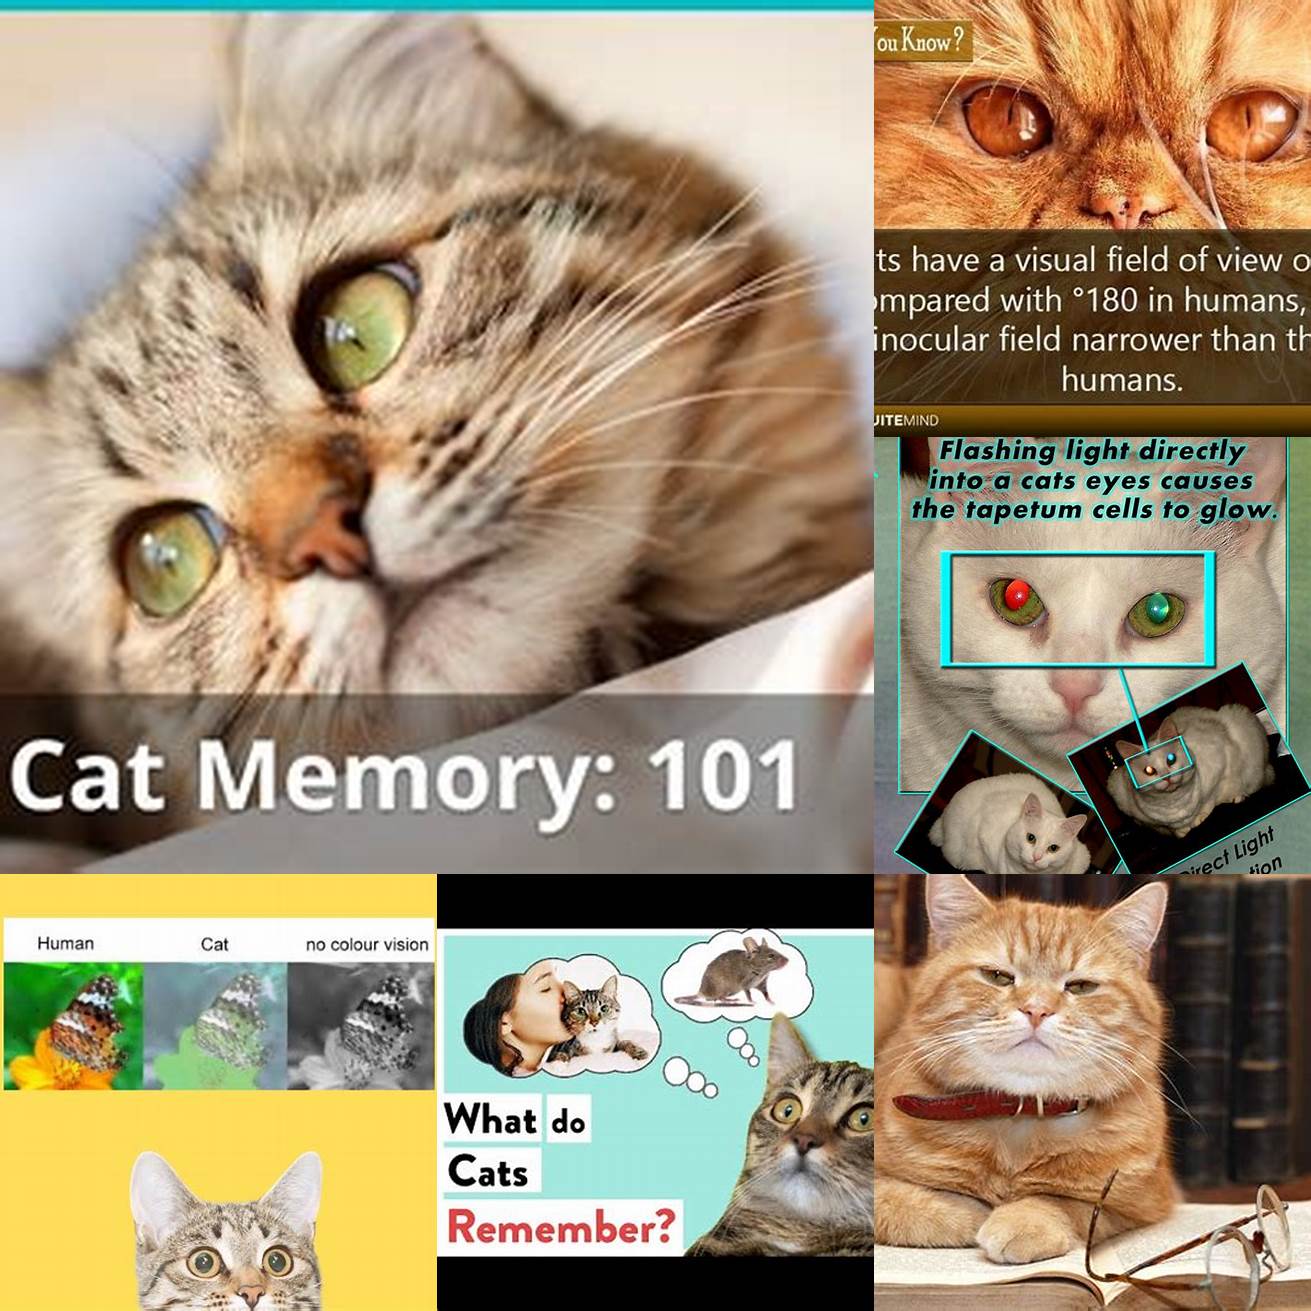 Cats have a visual memory